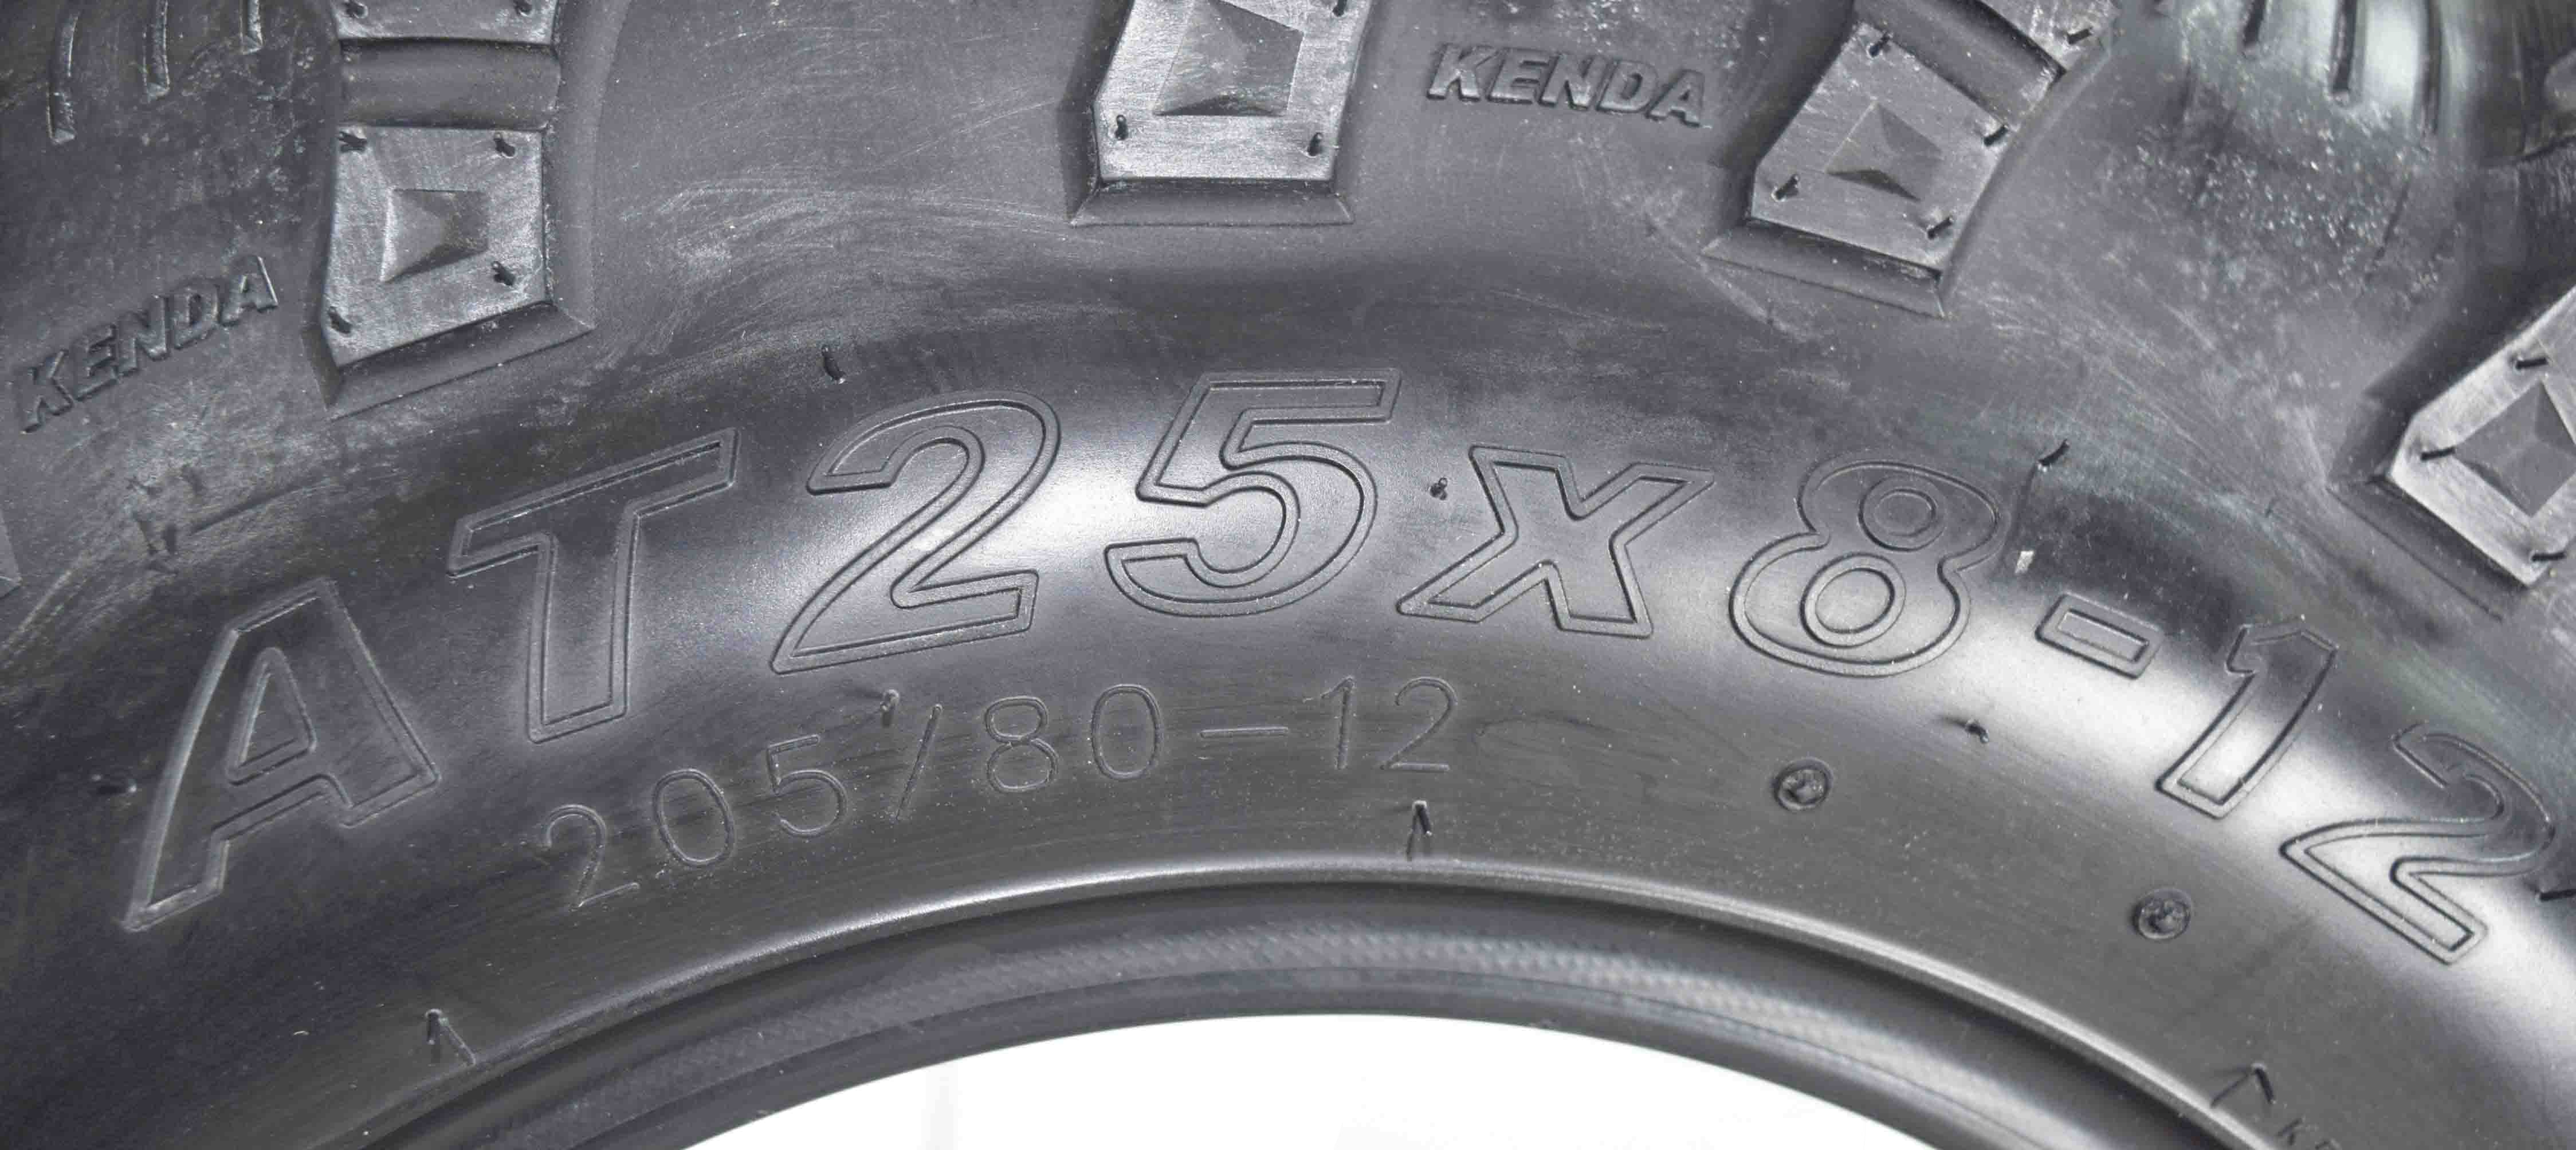 Kenda Bear Claw EVO  25x8-12 Front ATV/UTV Tire